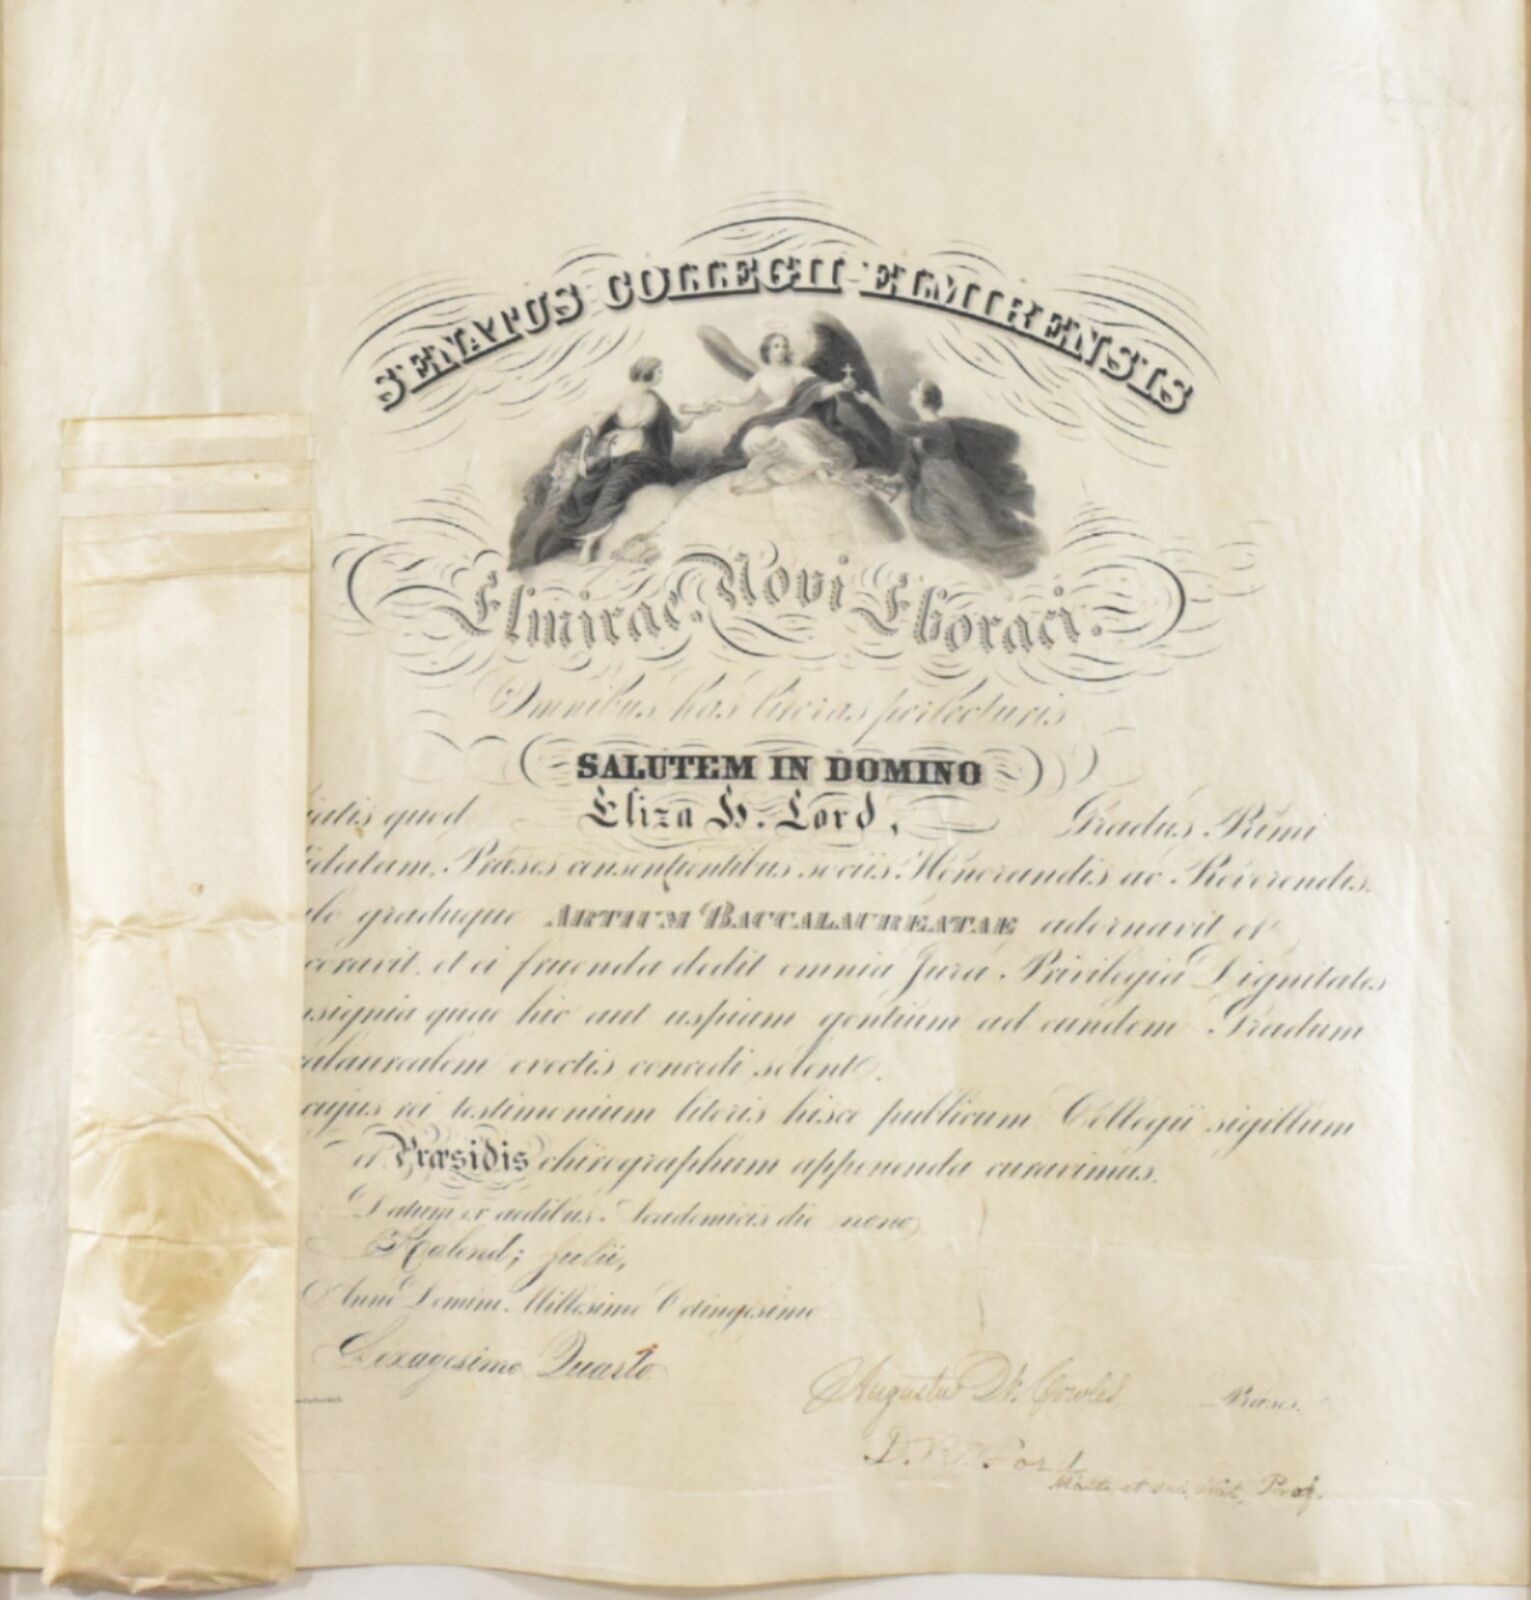 c1864 Antique A.B. Elmira College Diploma Certificate Eliza Hardy Lord